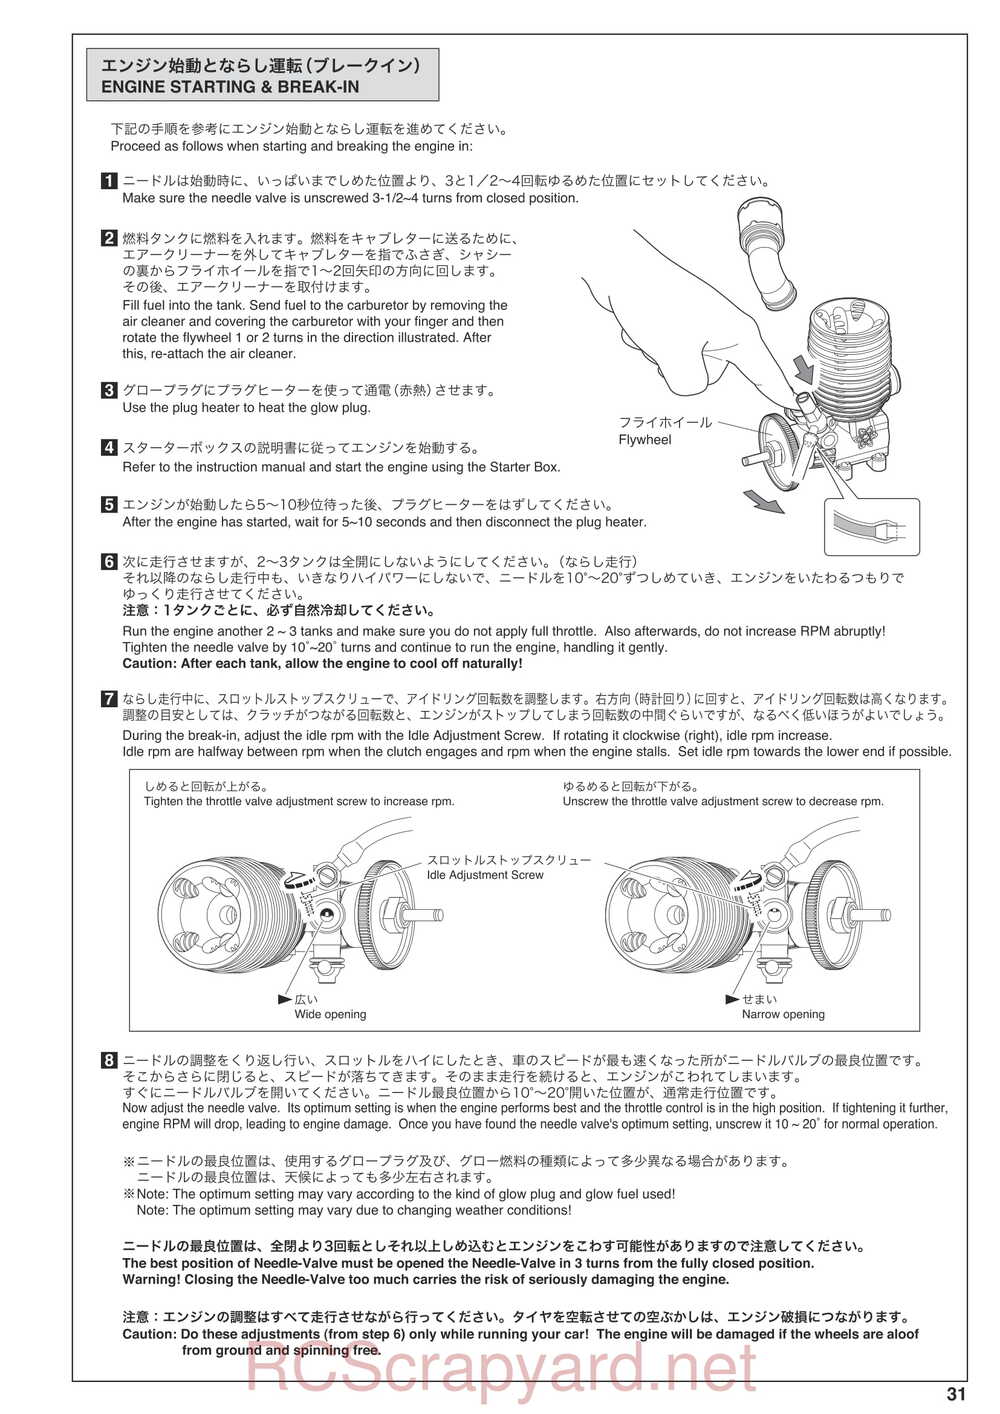 Kyosho - 31007 - KF01 - Manual - Page 31